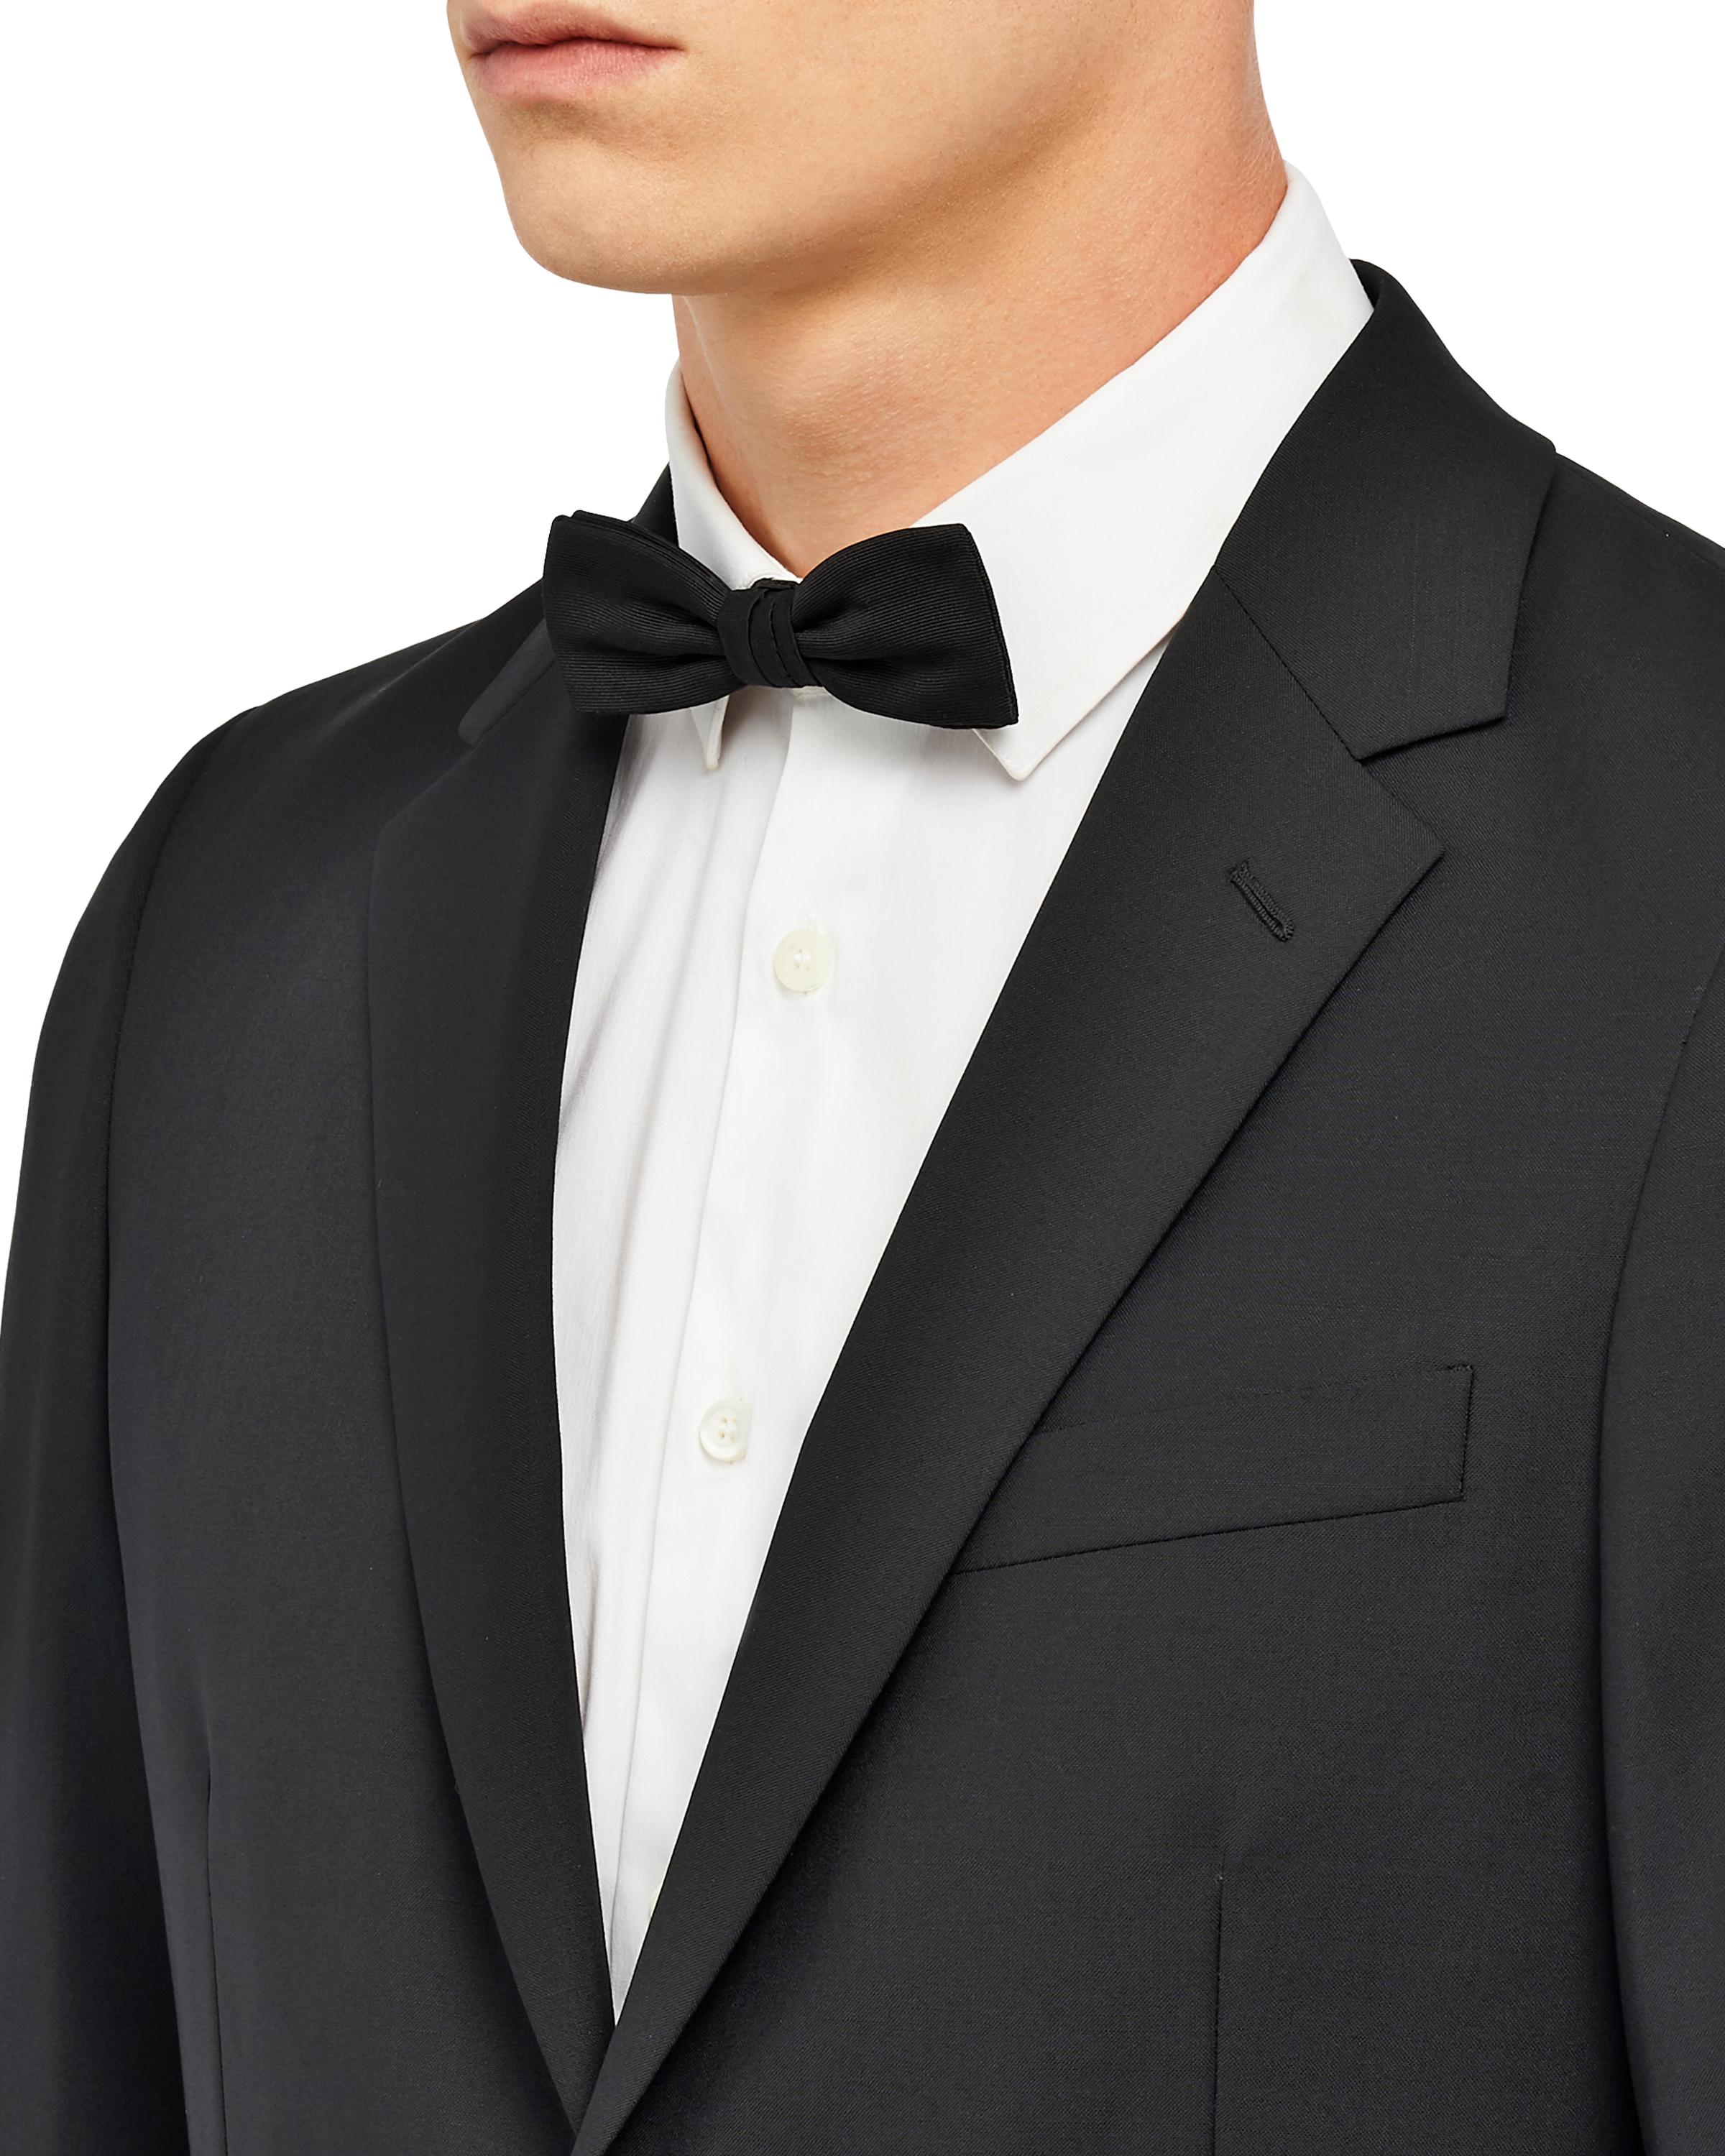 Prada Silk Faille Bow-tie in Black for Men - Lyst